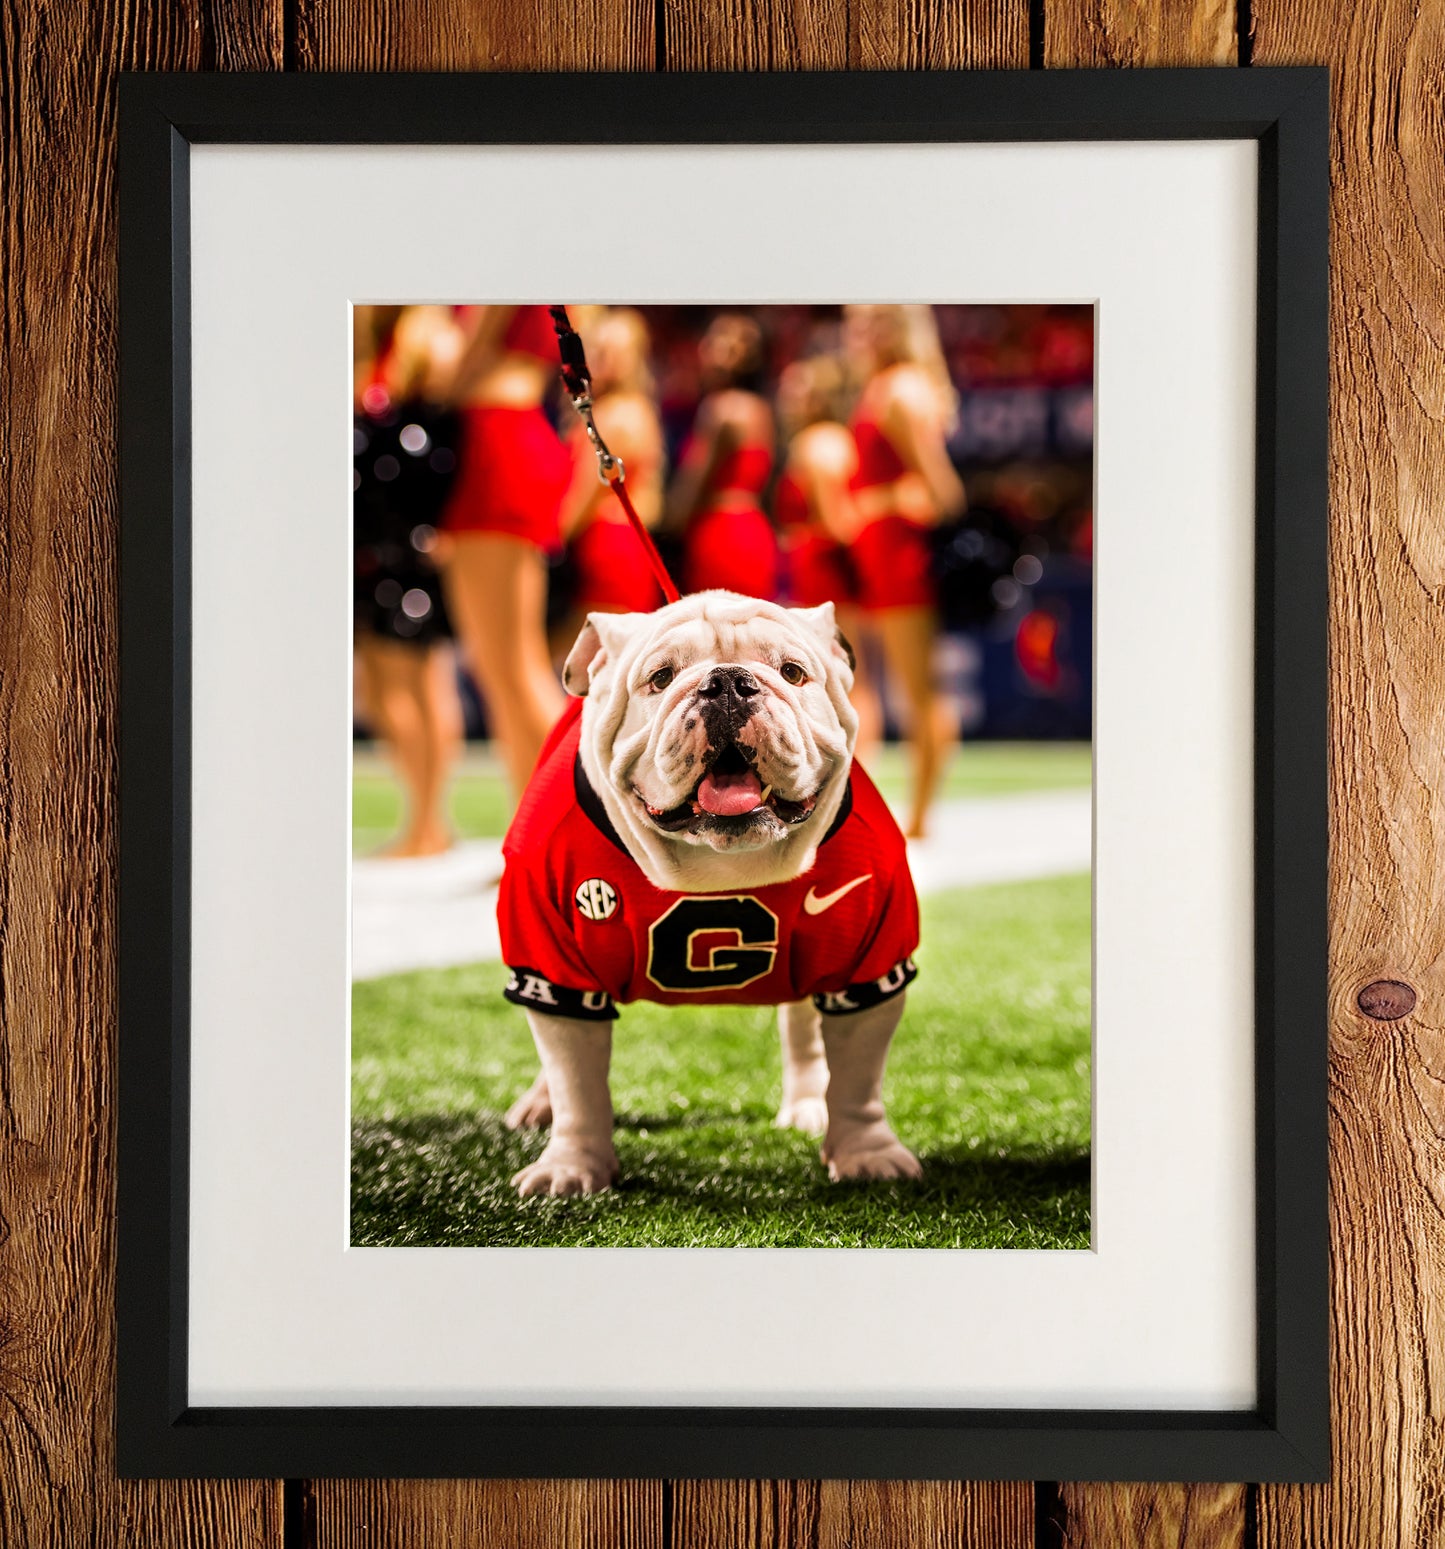 SEC Champion Uga X Photo Print & Canvas Wrap - Georgia Bulldogs Art